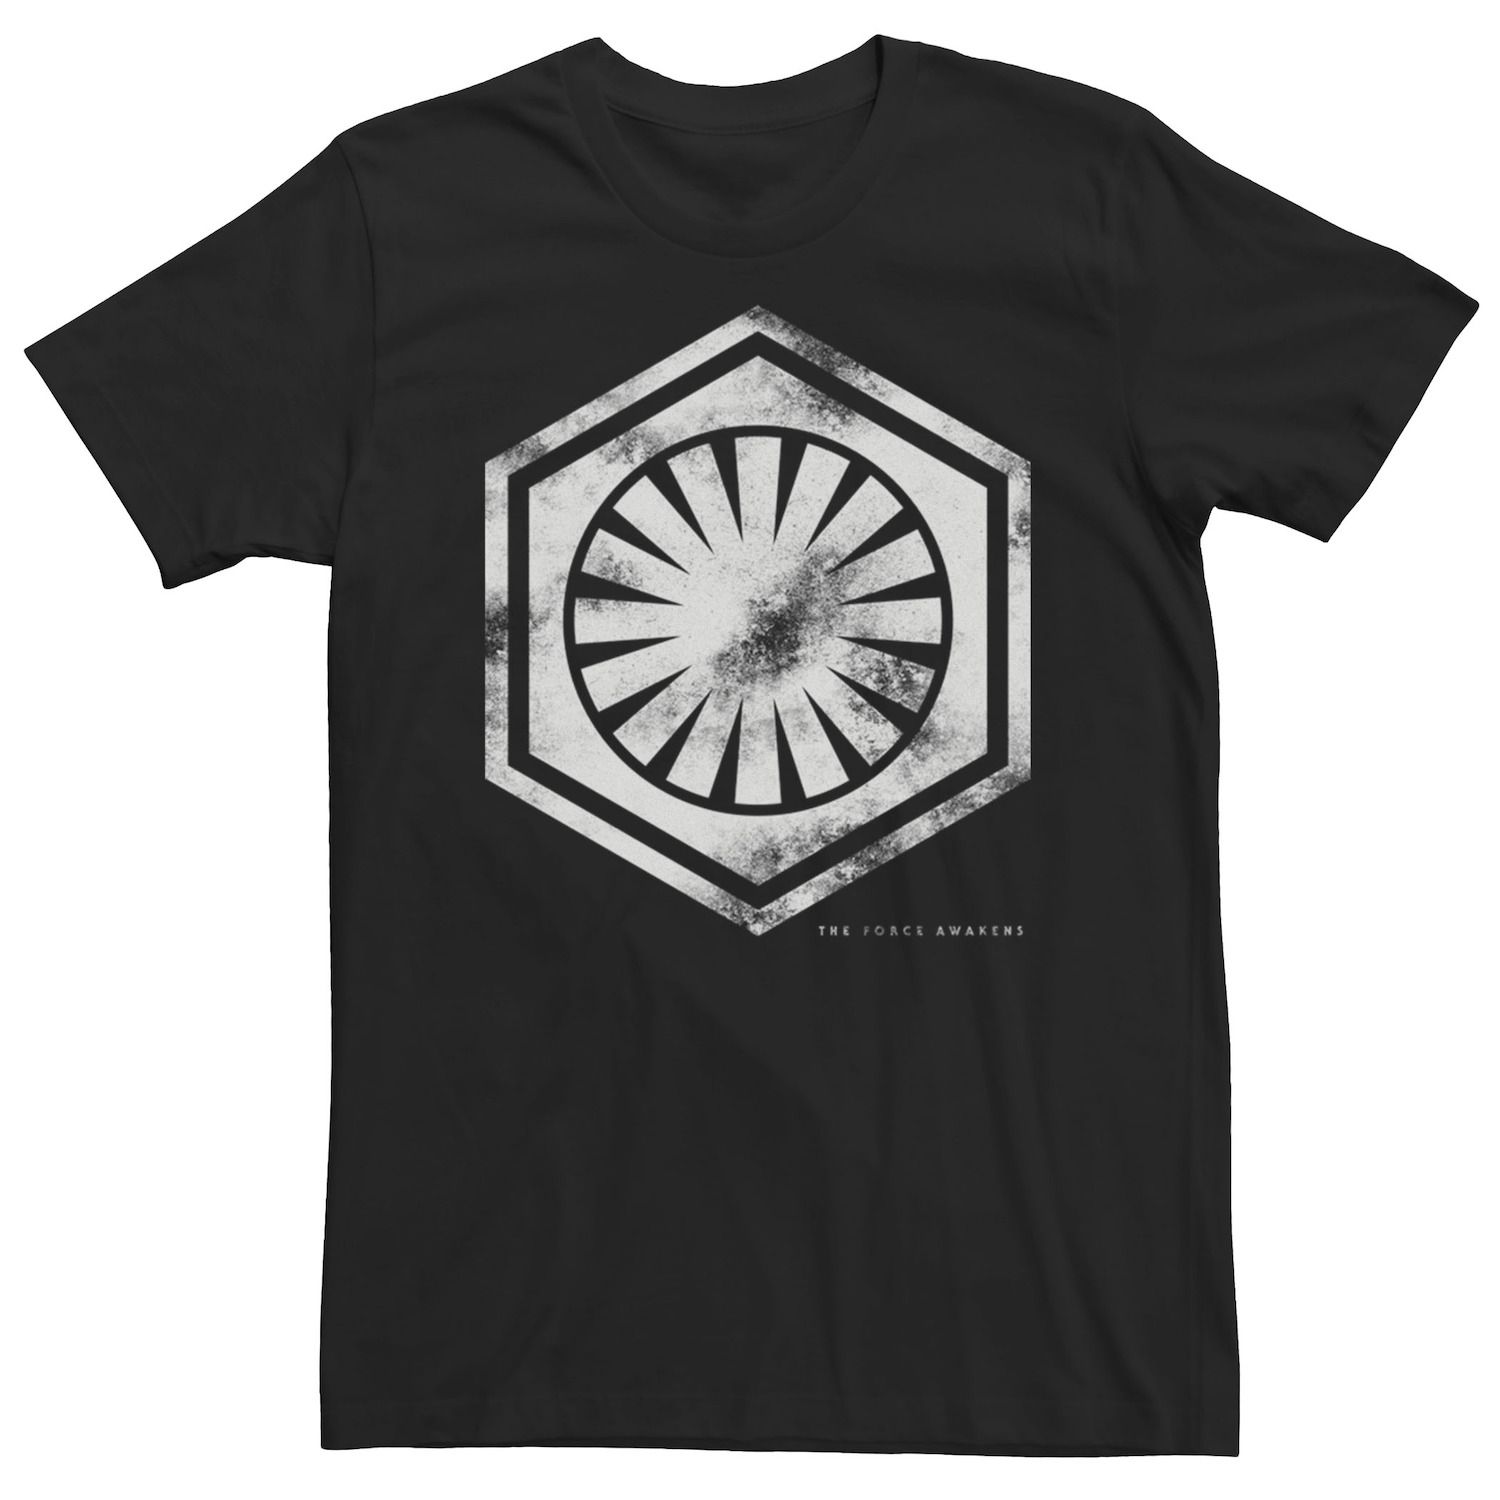 Мужская футболка с символом The Force Awakens First Order Star Wars